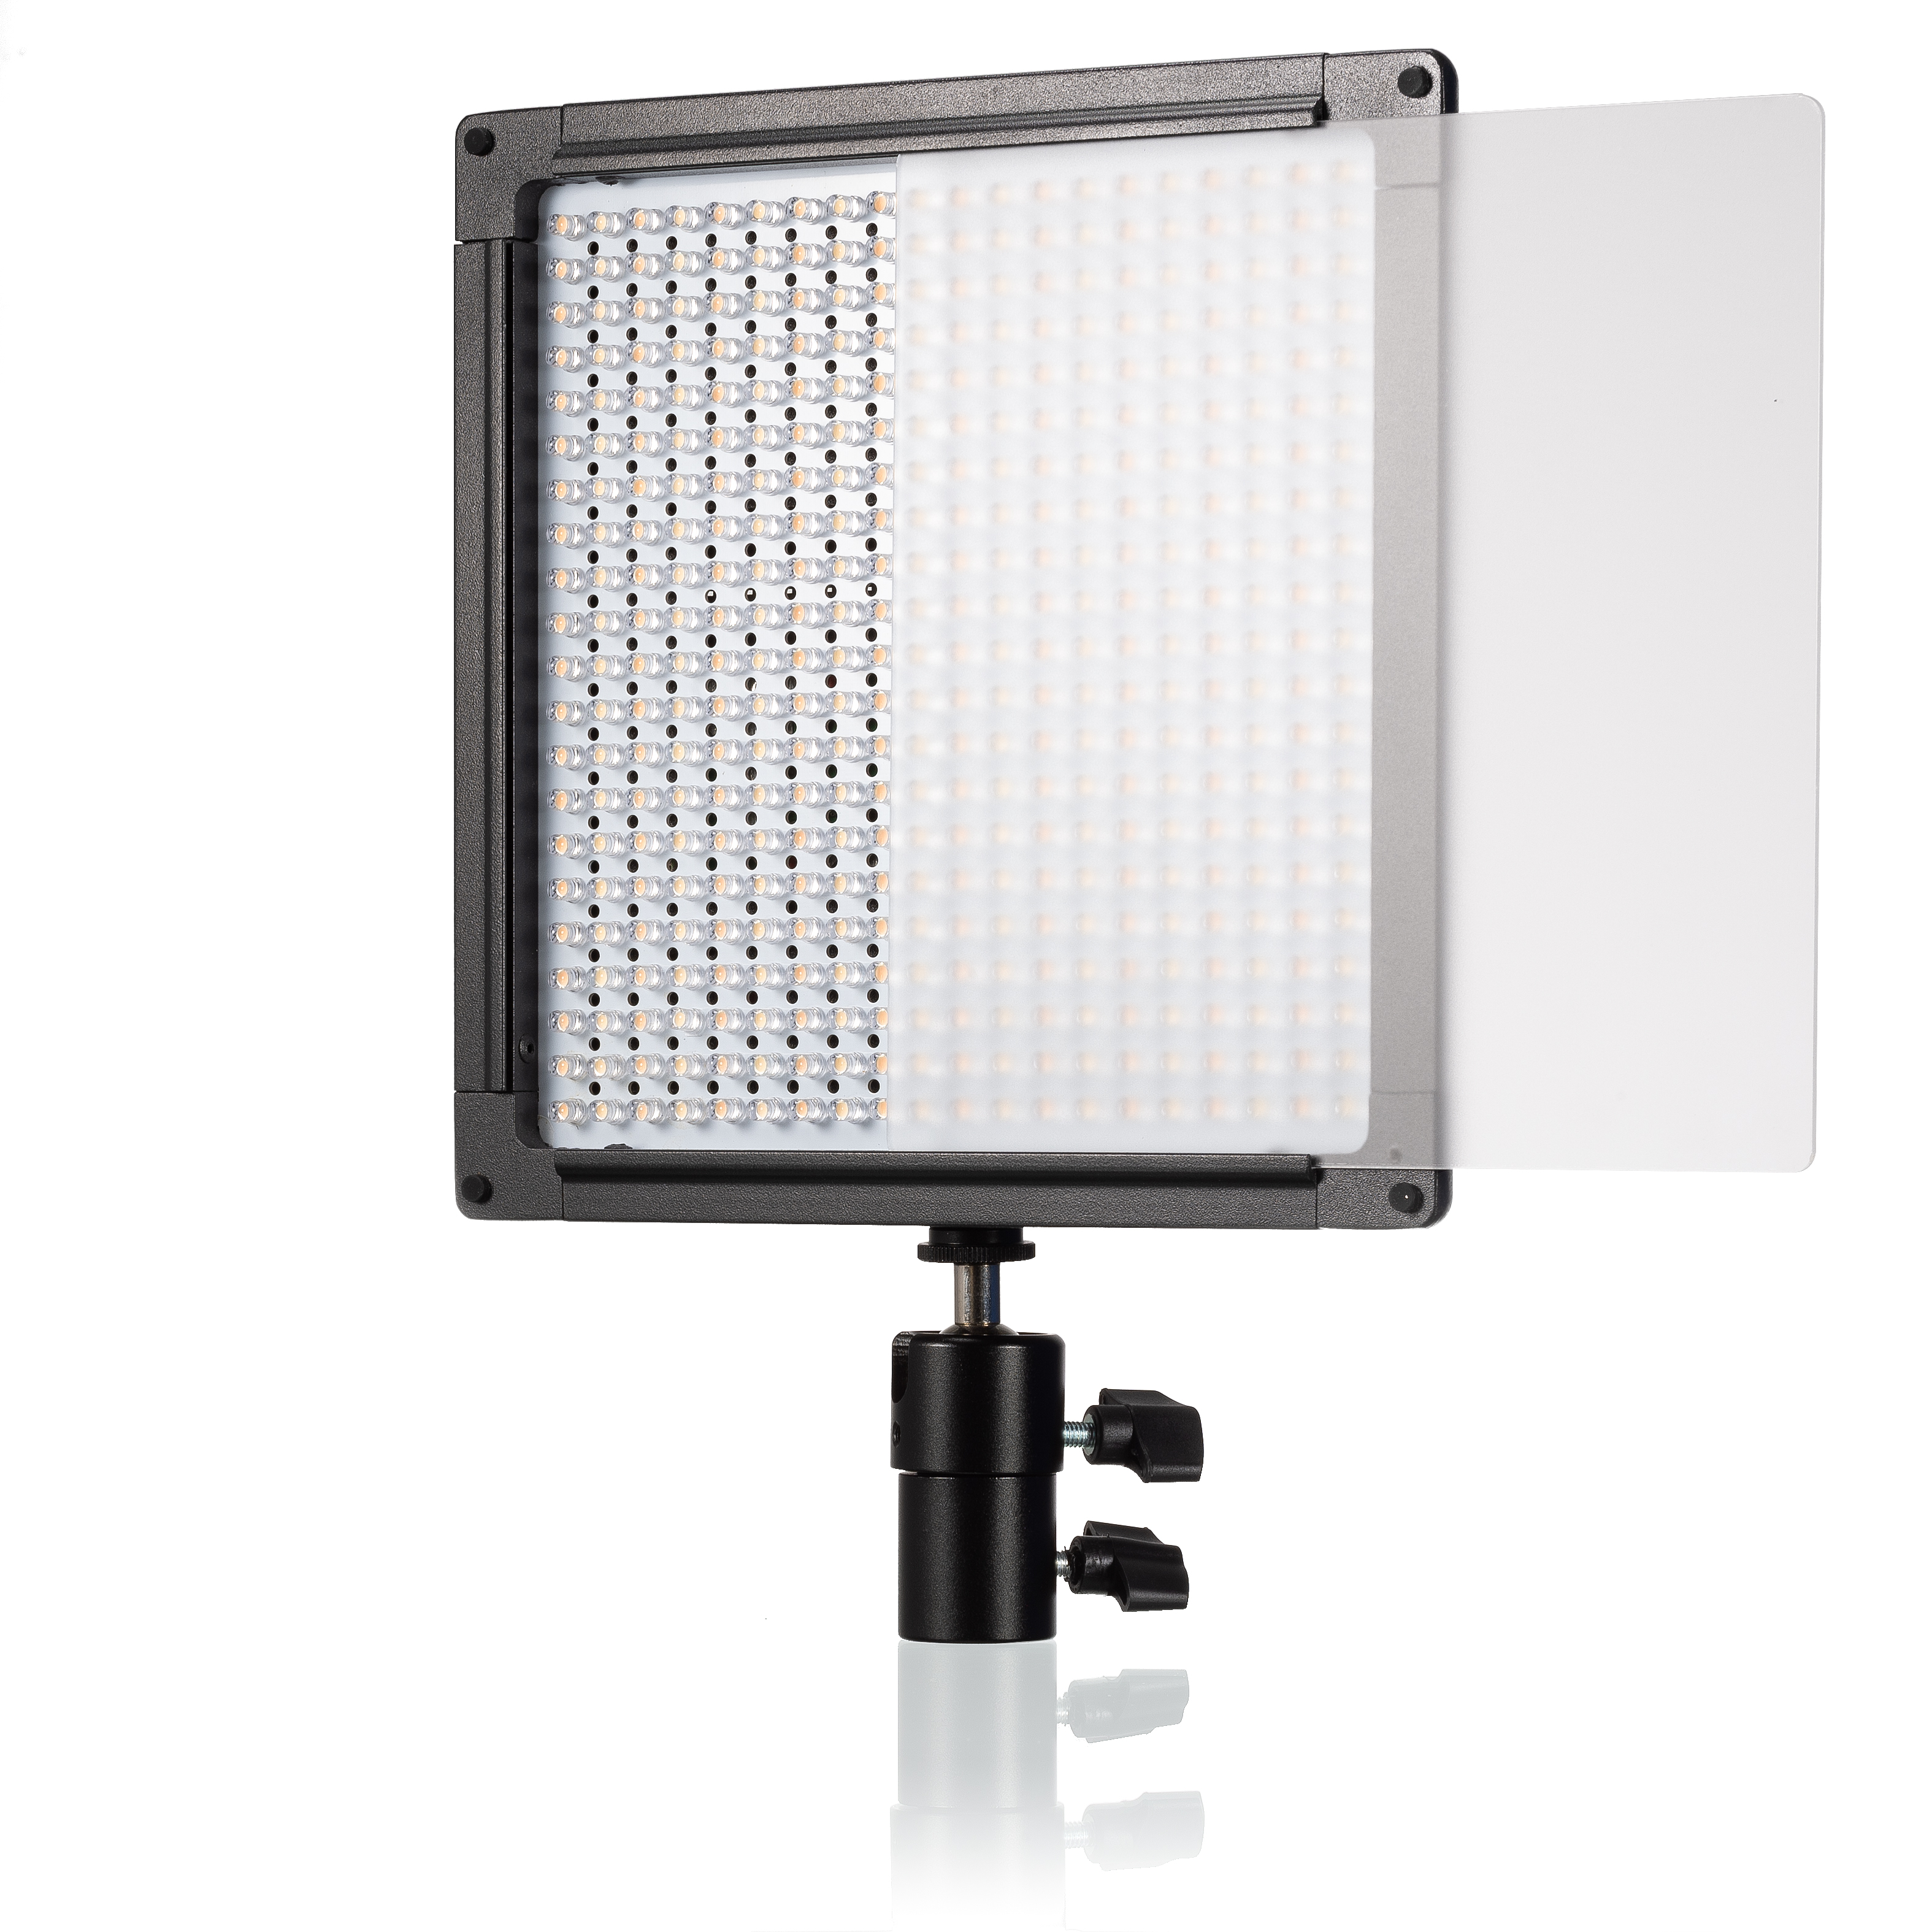 BRESSER LED SH-420A Bi-Color (25 W / 3700 LUX) Slimline Studio Lamp